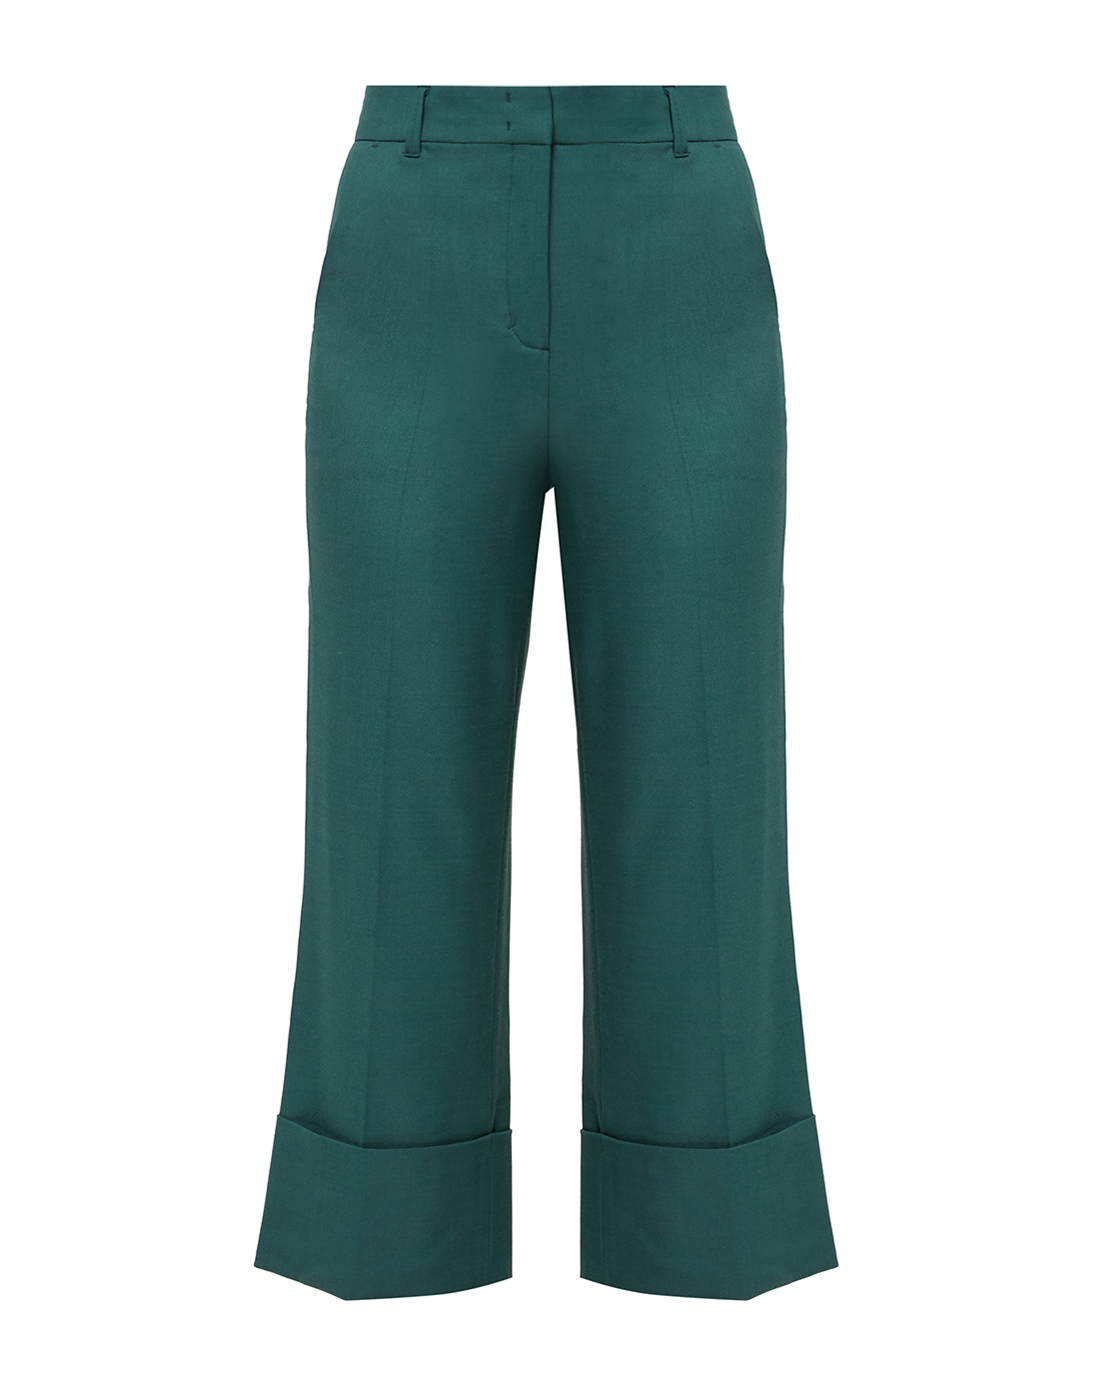 Женские зеленые брюки Dorothee Schumacher S940213/569-1